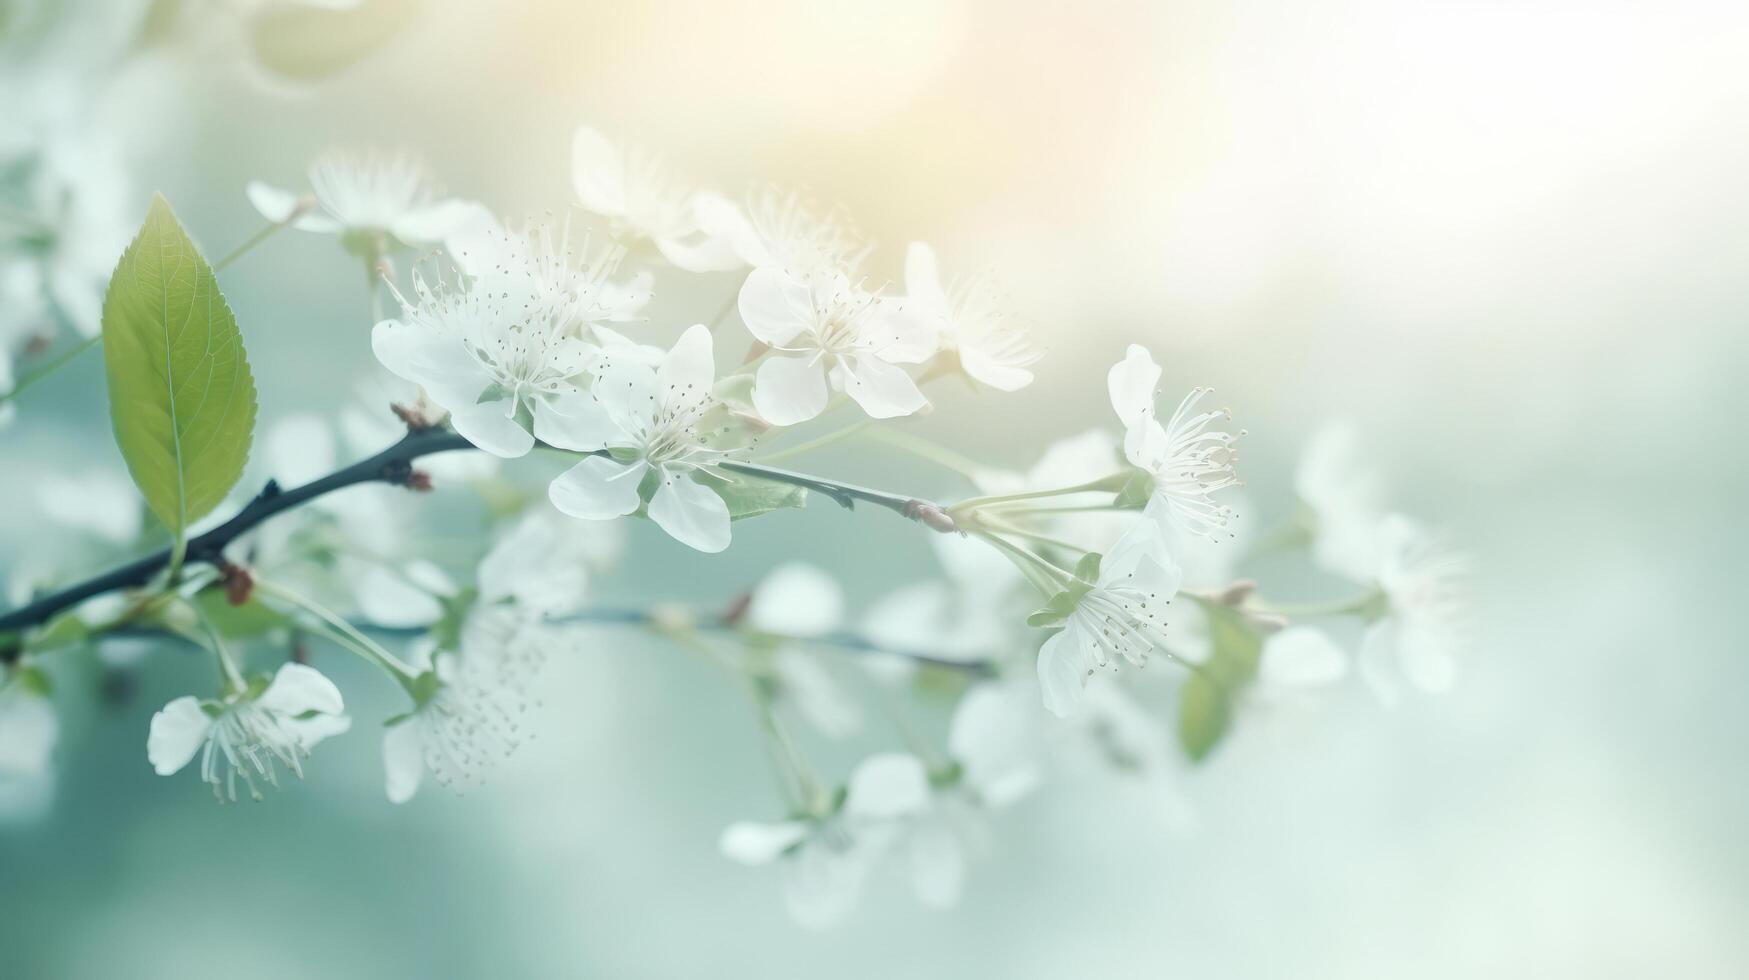 Spring blossom trees background. Illustration photo